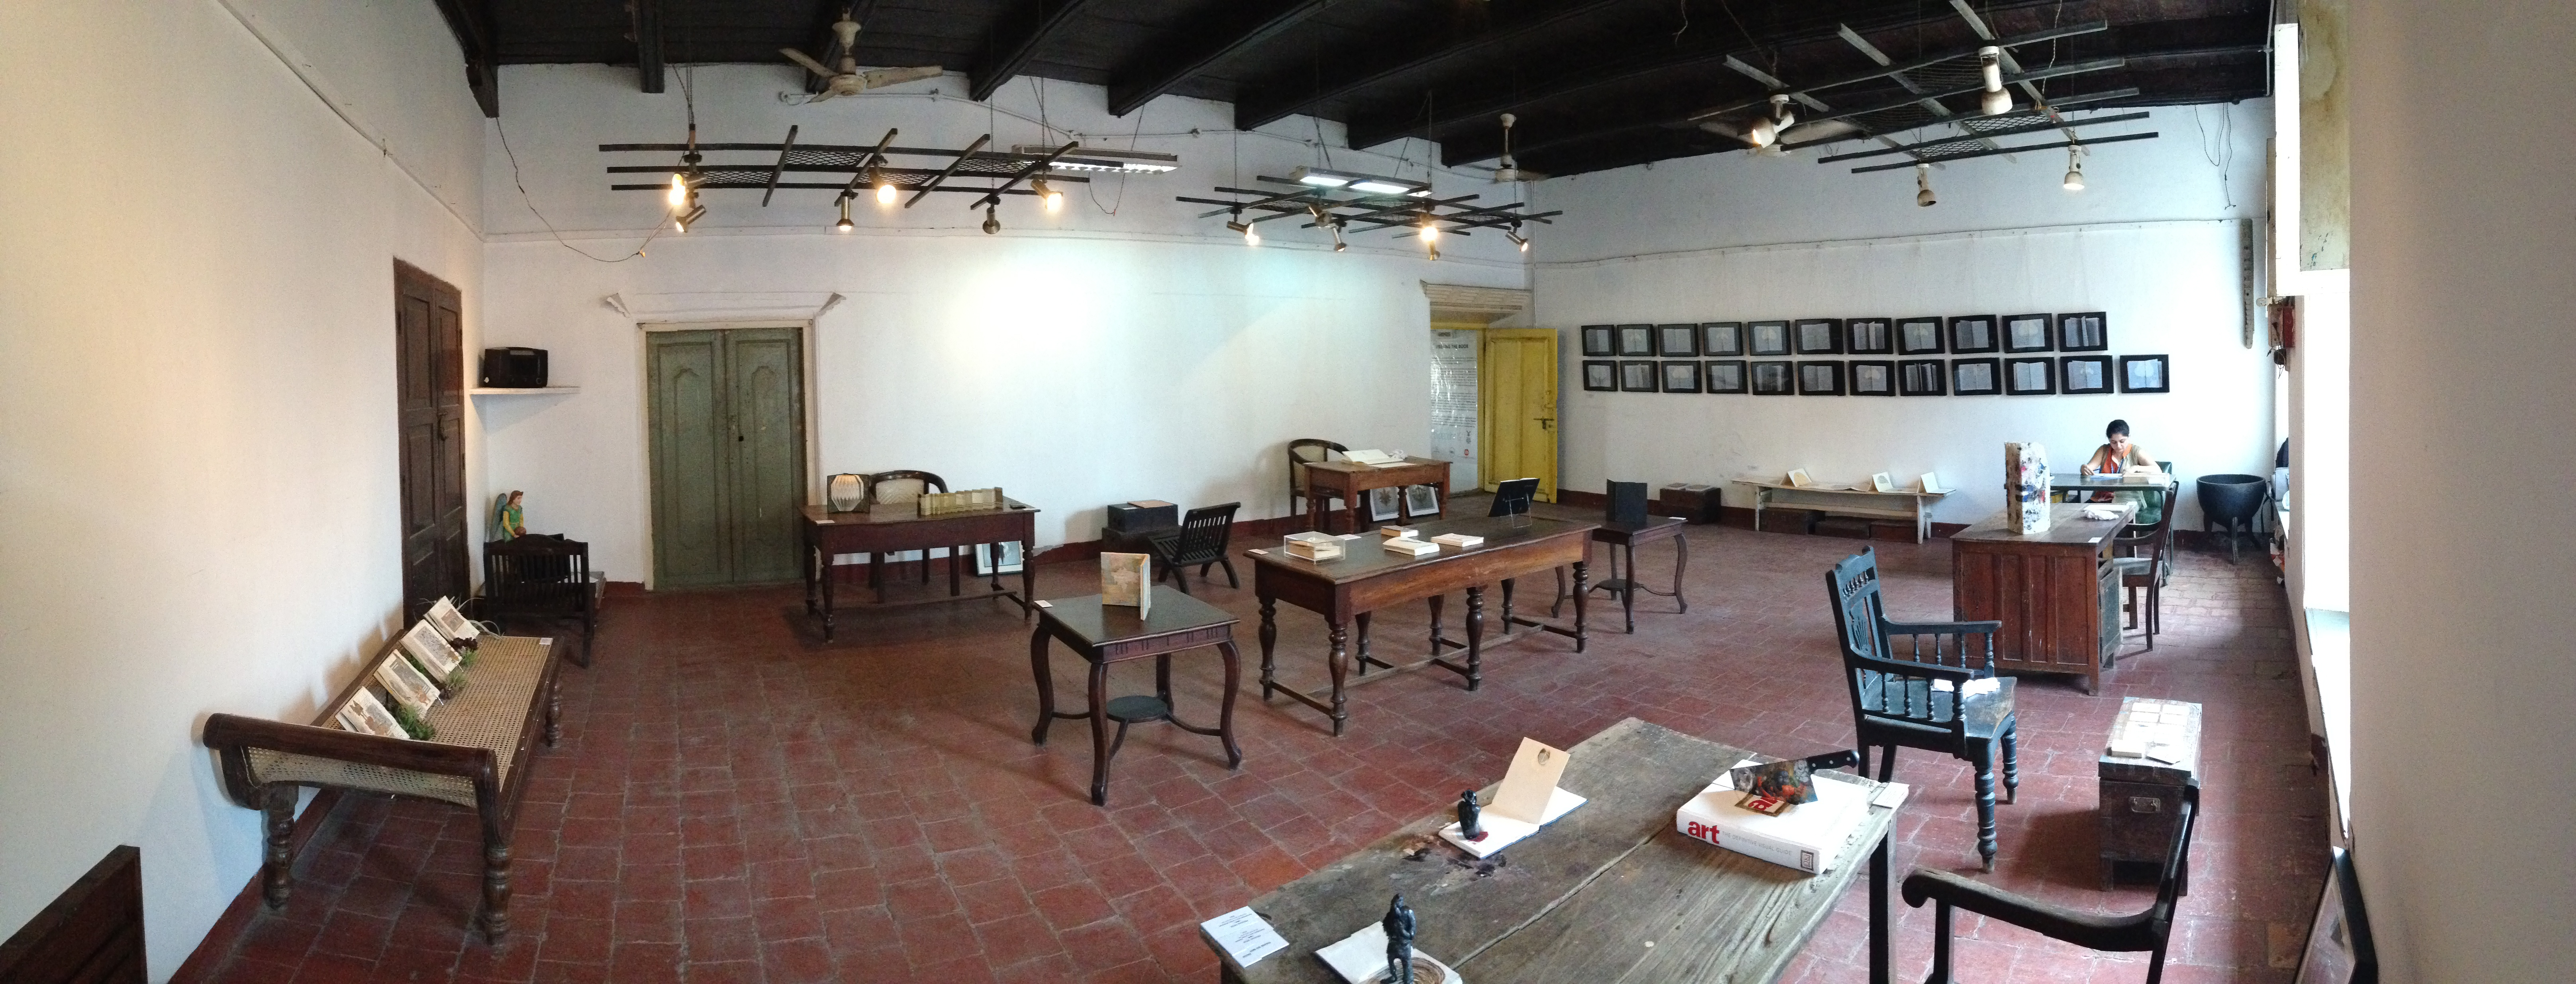 Reading Room at Kochi Biennale